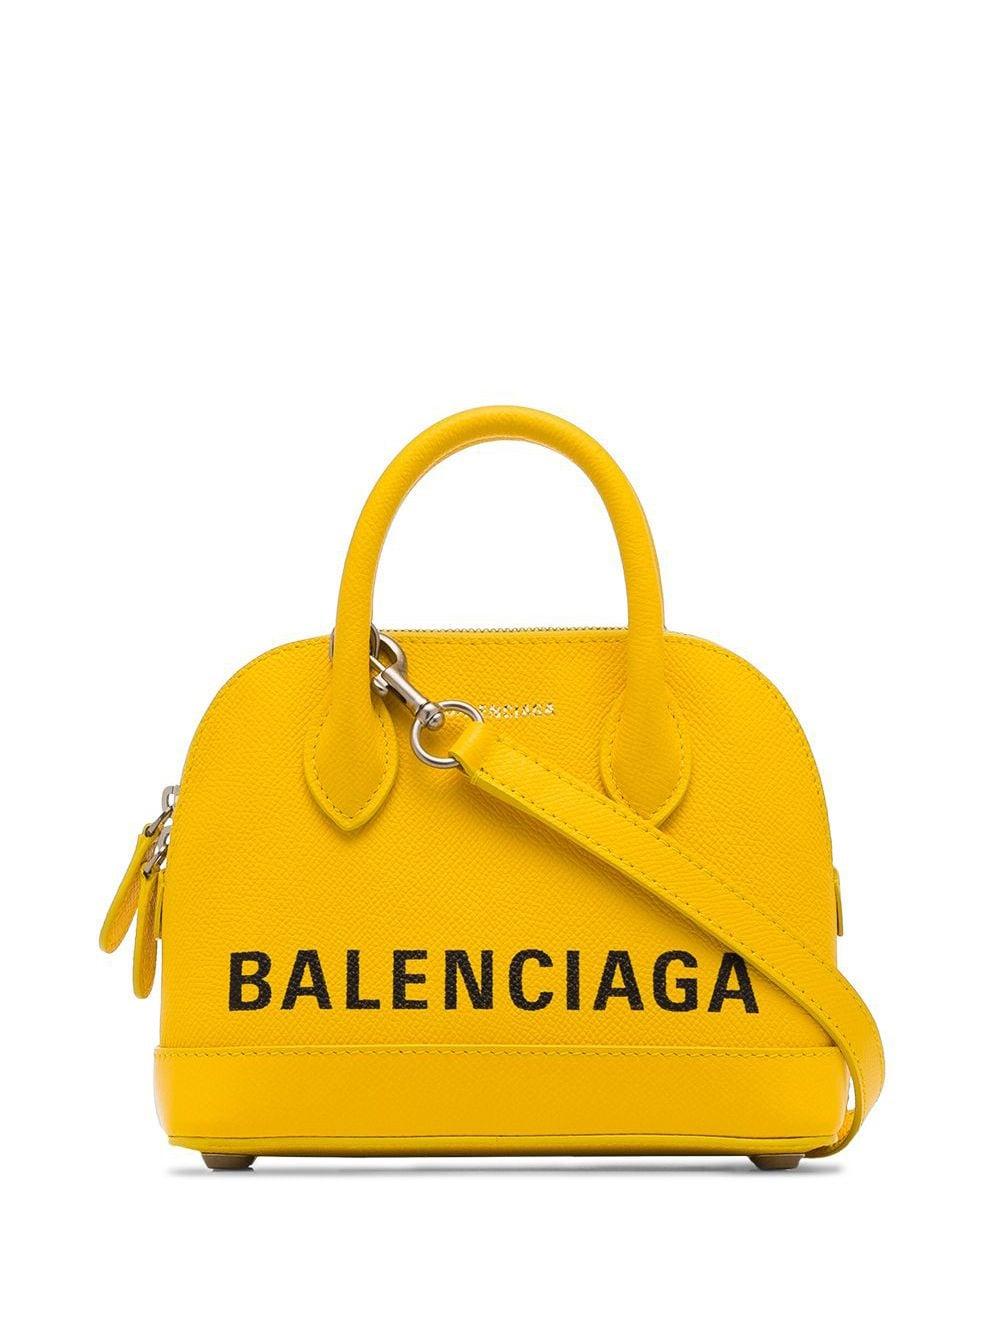 Balenciaga Yellow Giant 12 Rose Gold Motorcyle City Shoulder Hand Bag  Satchel  eBay